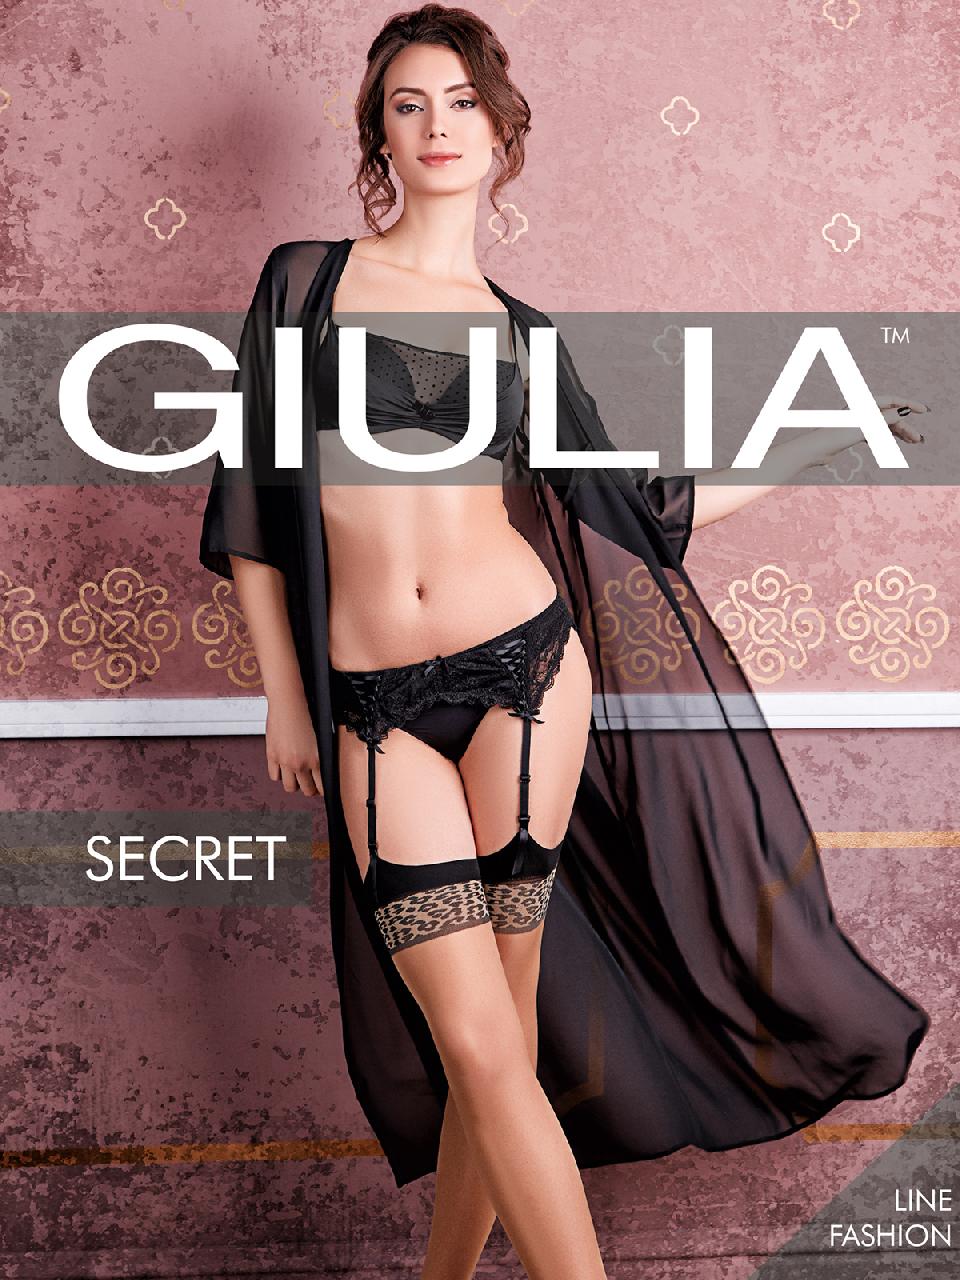 Giulia Secret 08 /чулки/ daino 1/2